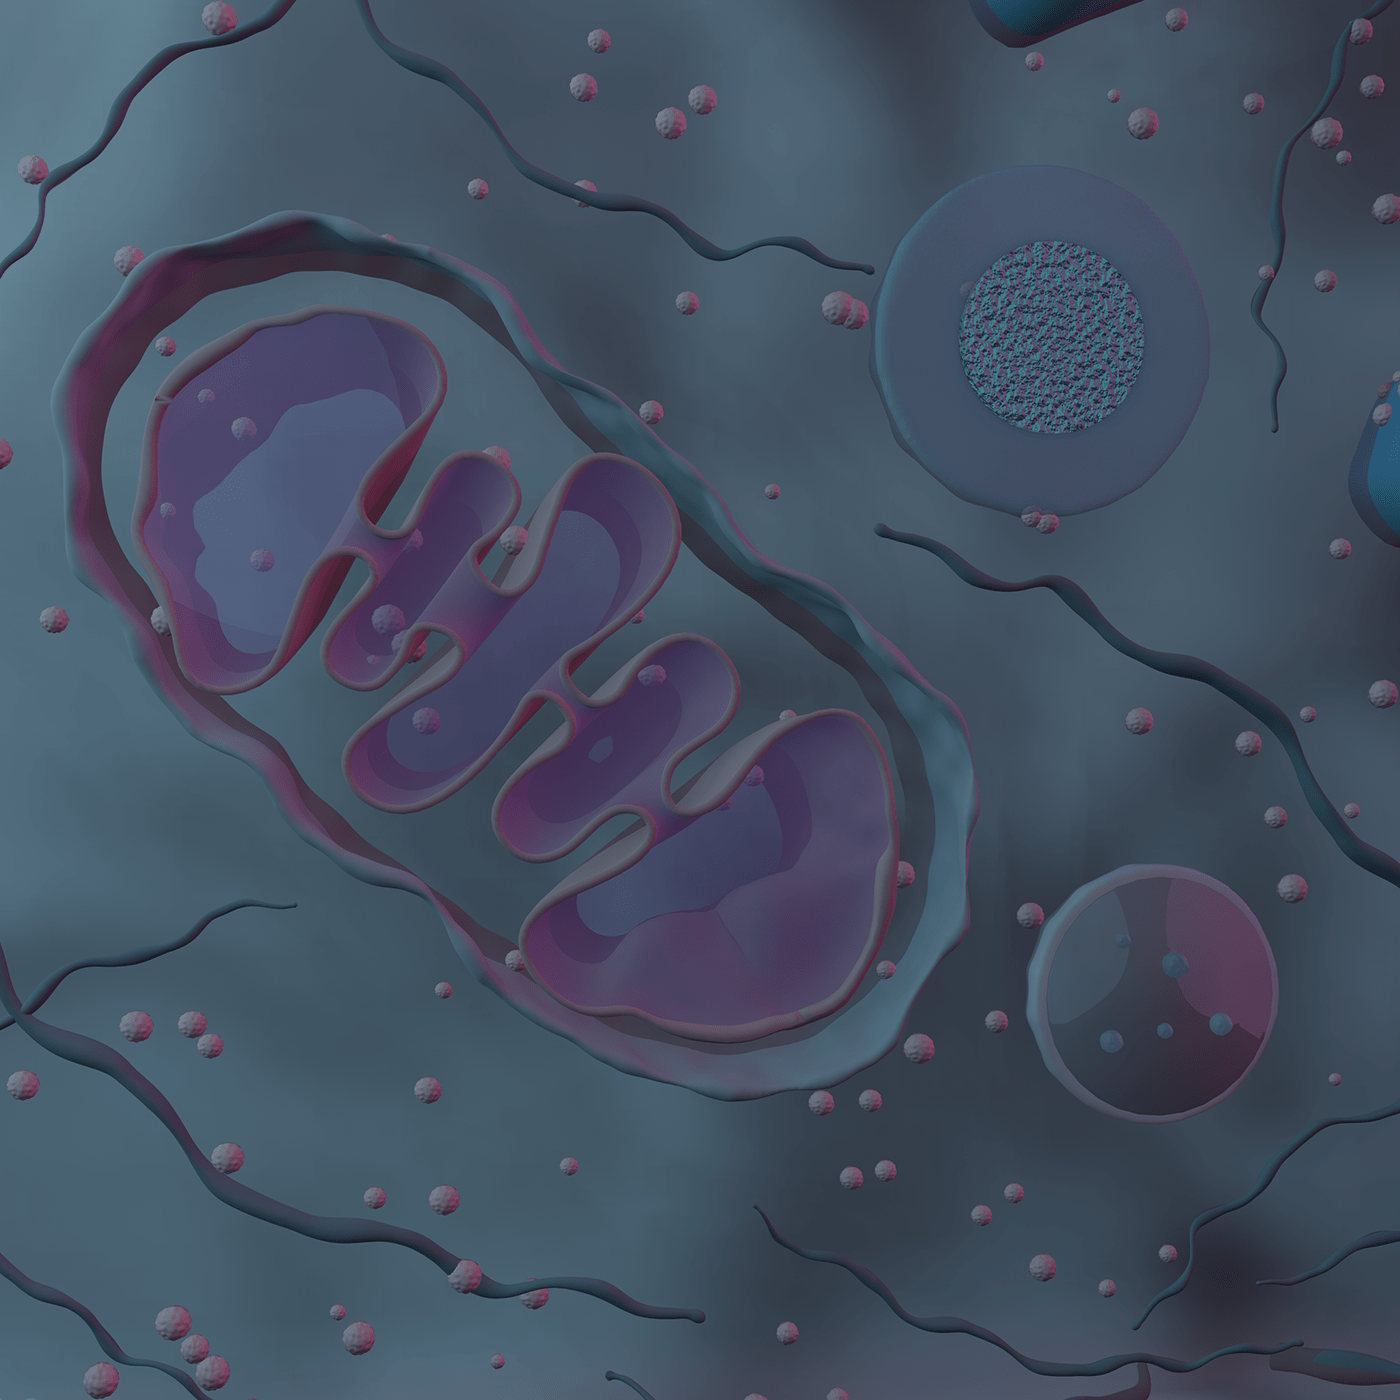 animal cell biology Cell eukaryotic Mitochondria molecular biology organelle SciArt science scientific illustration